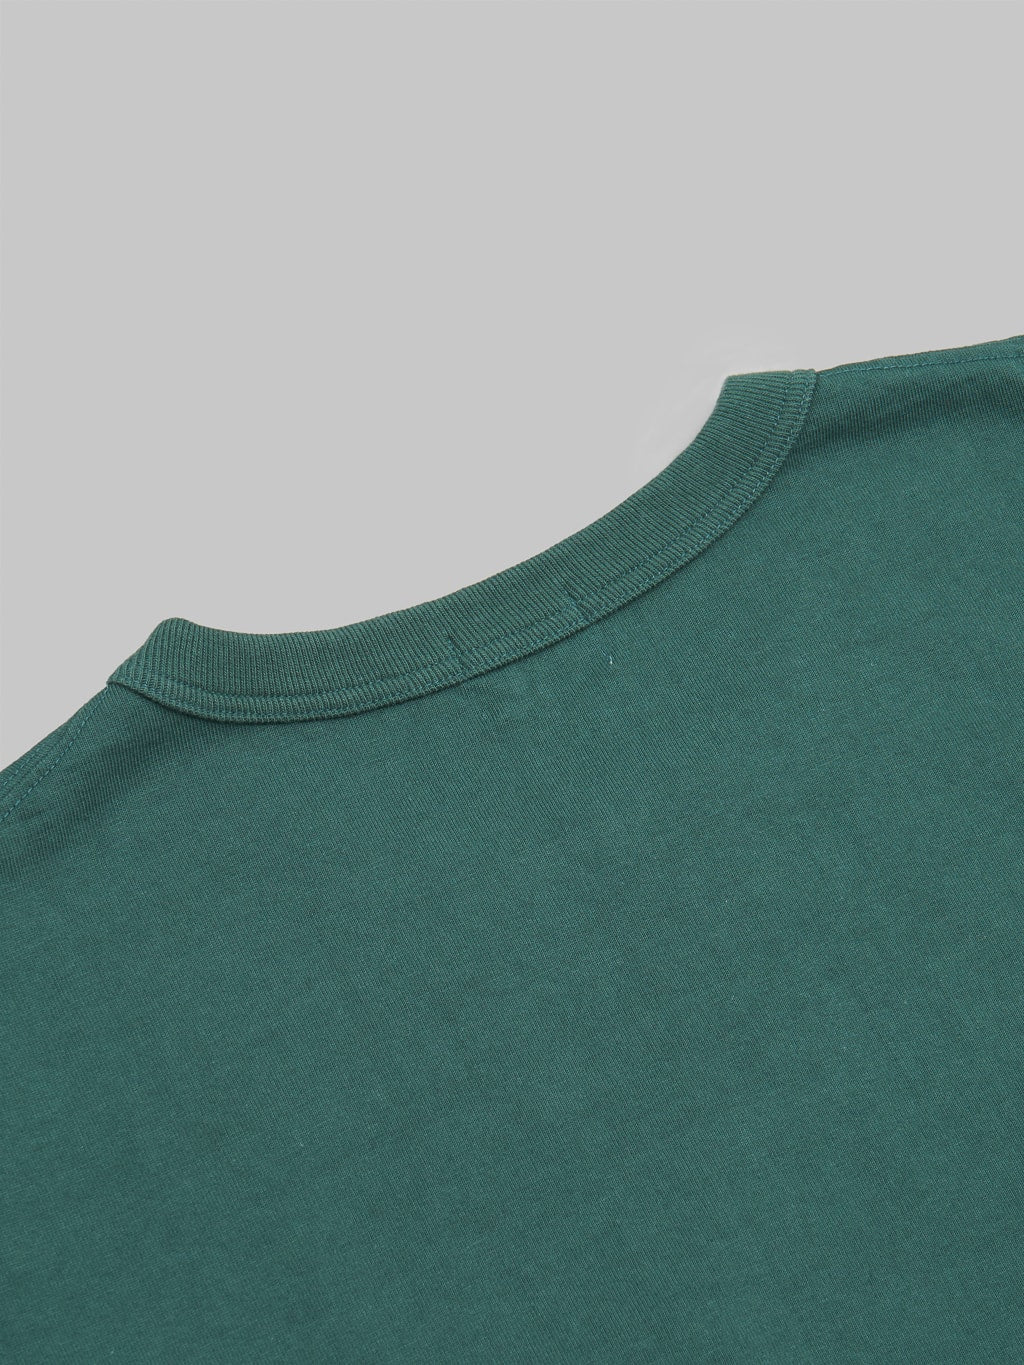 Whitesville Heavyweight Pocket T-Shirt Green